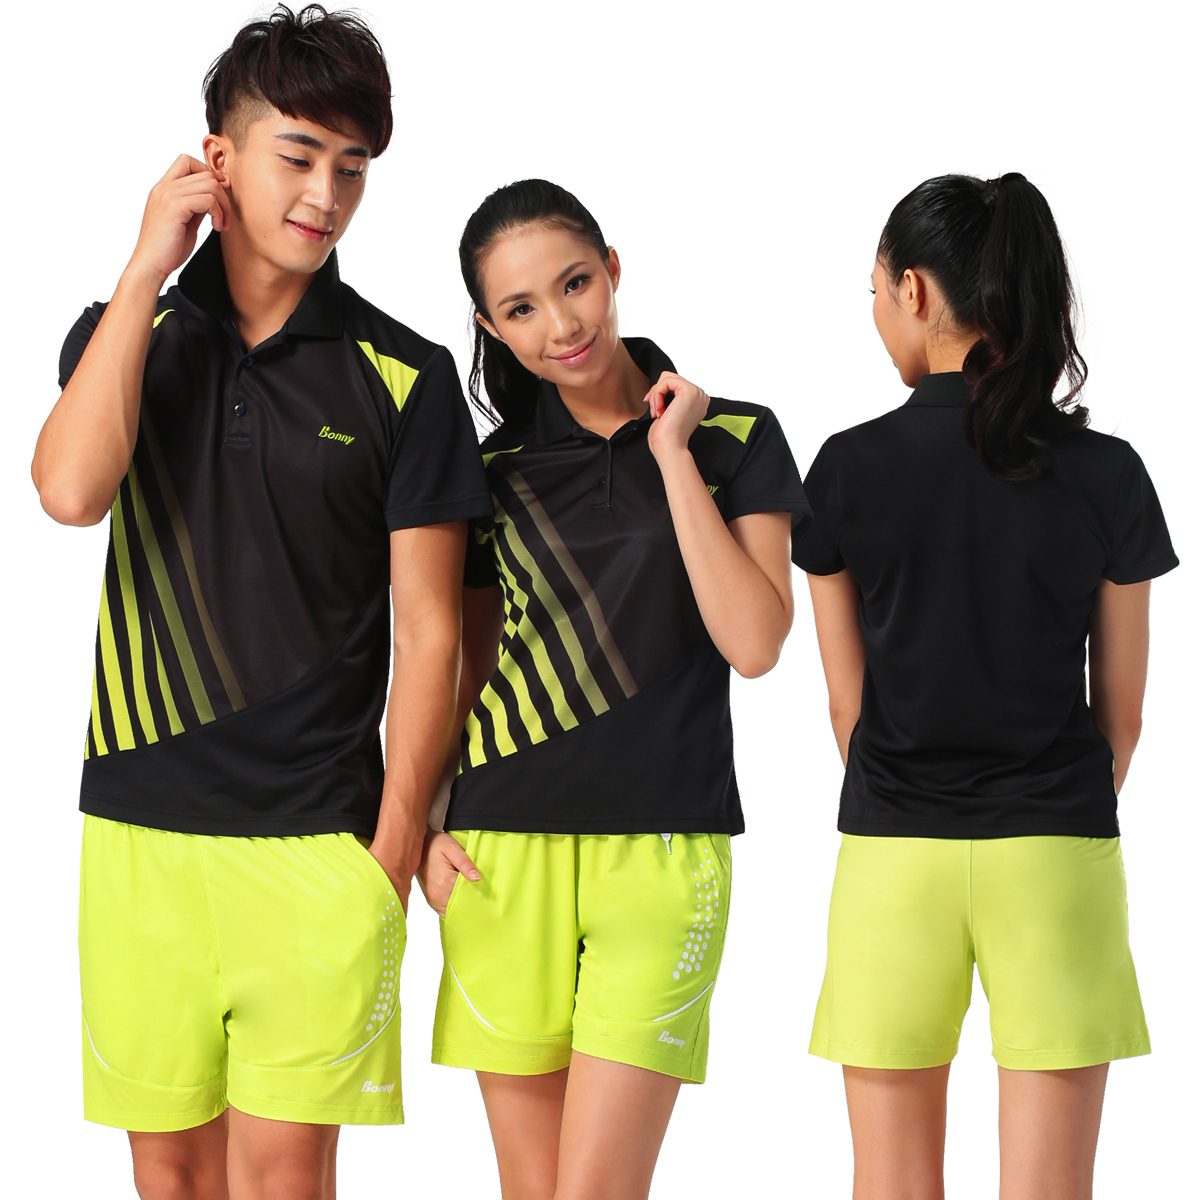 BONNY波力黑色正品速干羽毛球服运动服男女款比赛款短袖T恤训练服